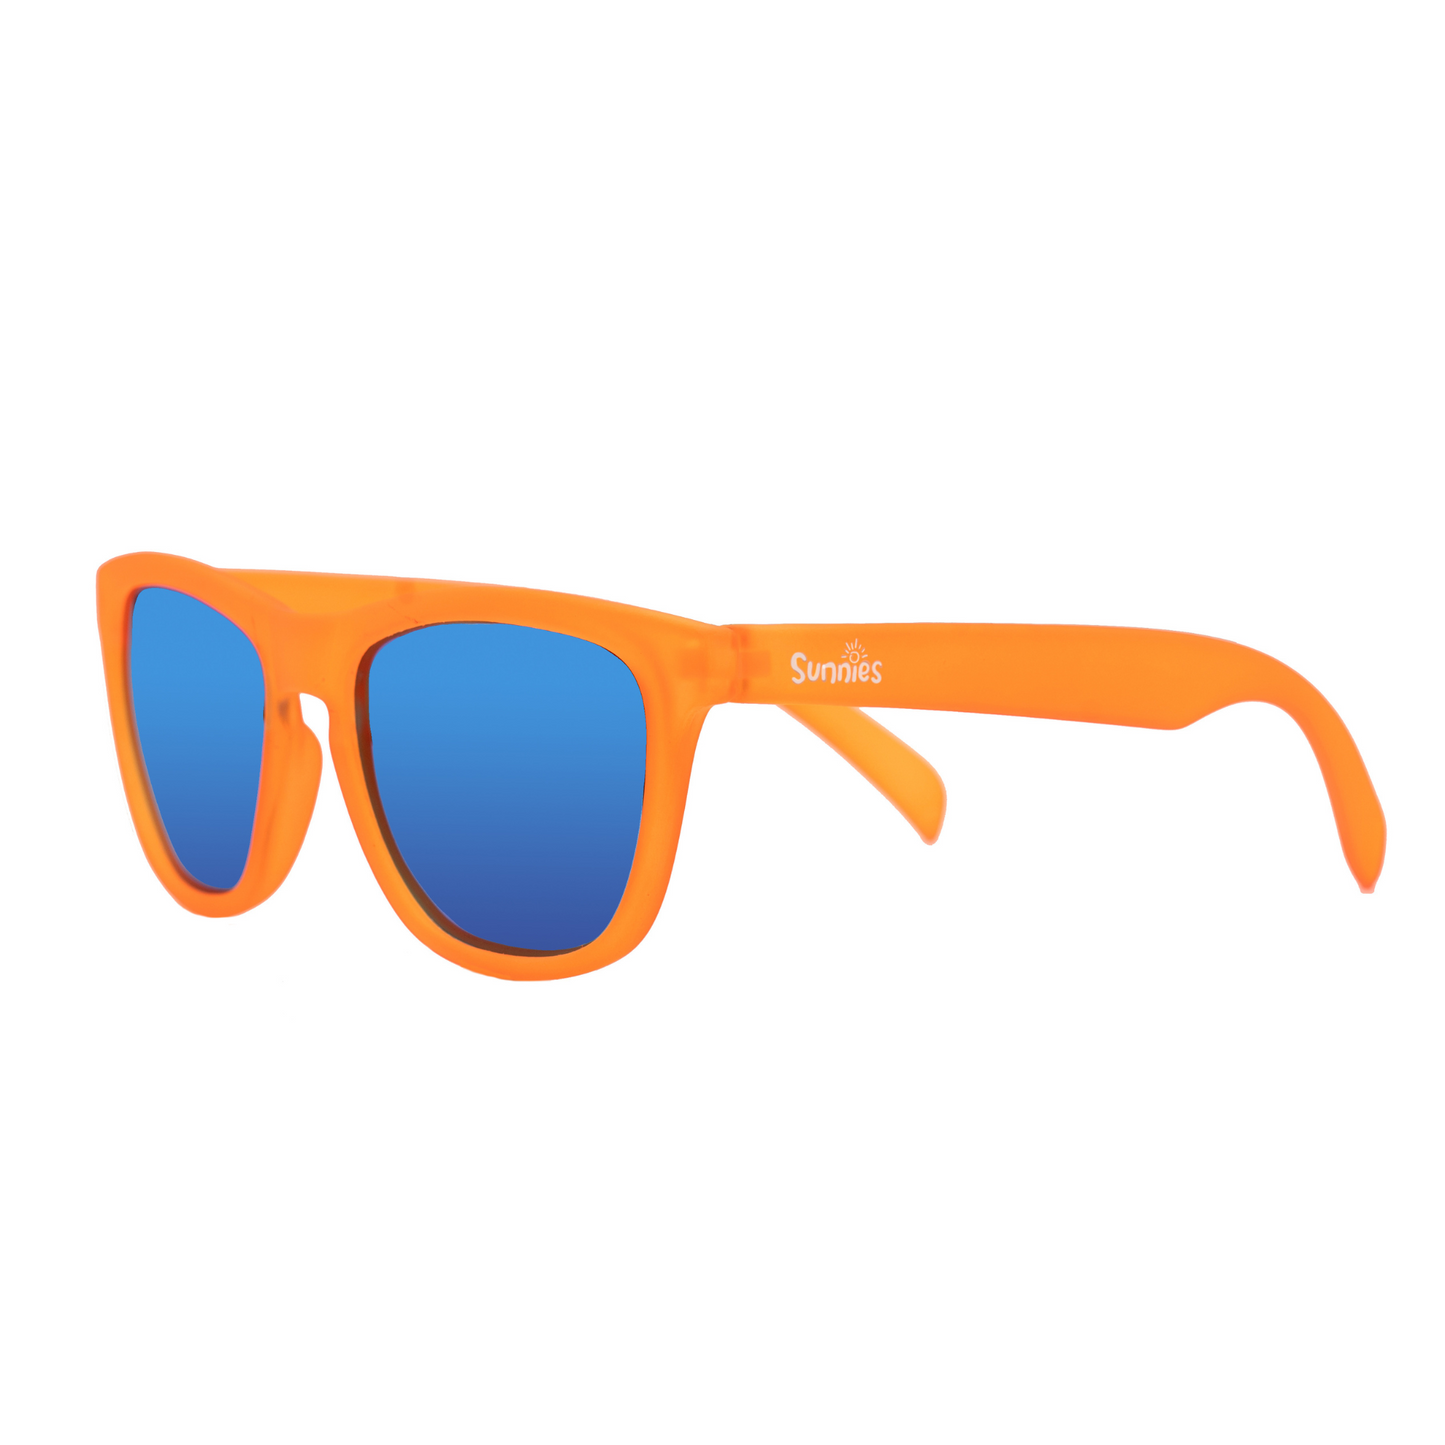 Sunnies Polarized Sunglasses for Kids